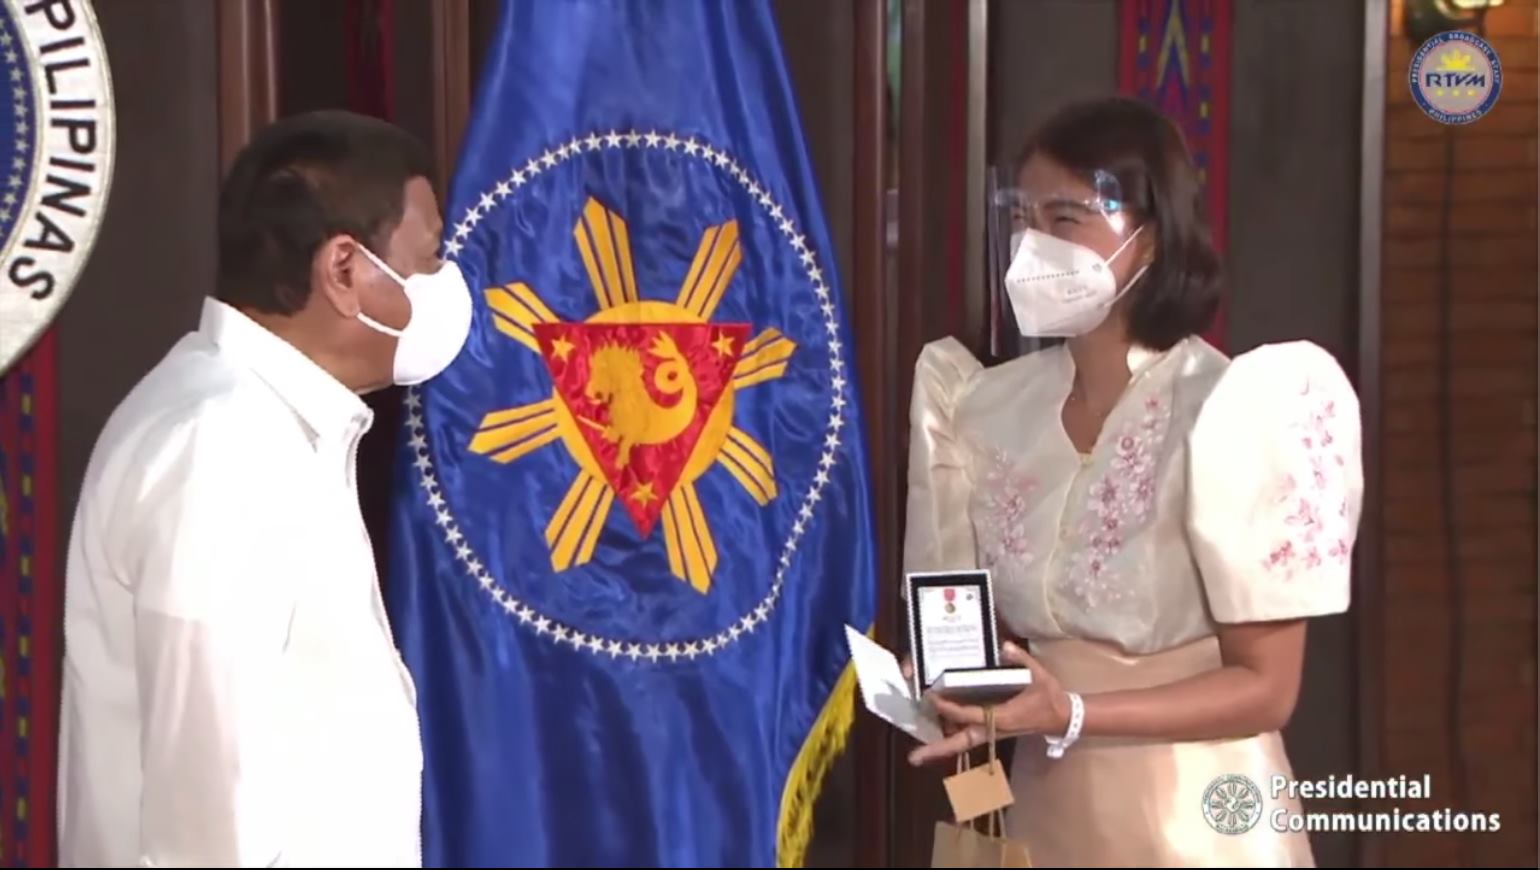 2 PLM alumni conferred with Order of Lapu-Lapu for act of heroism